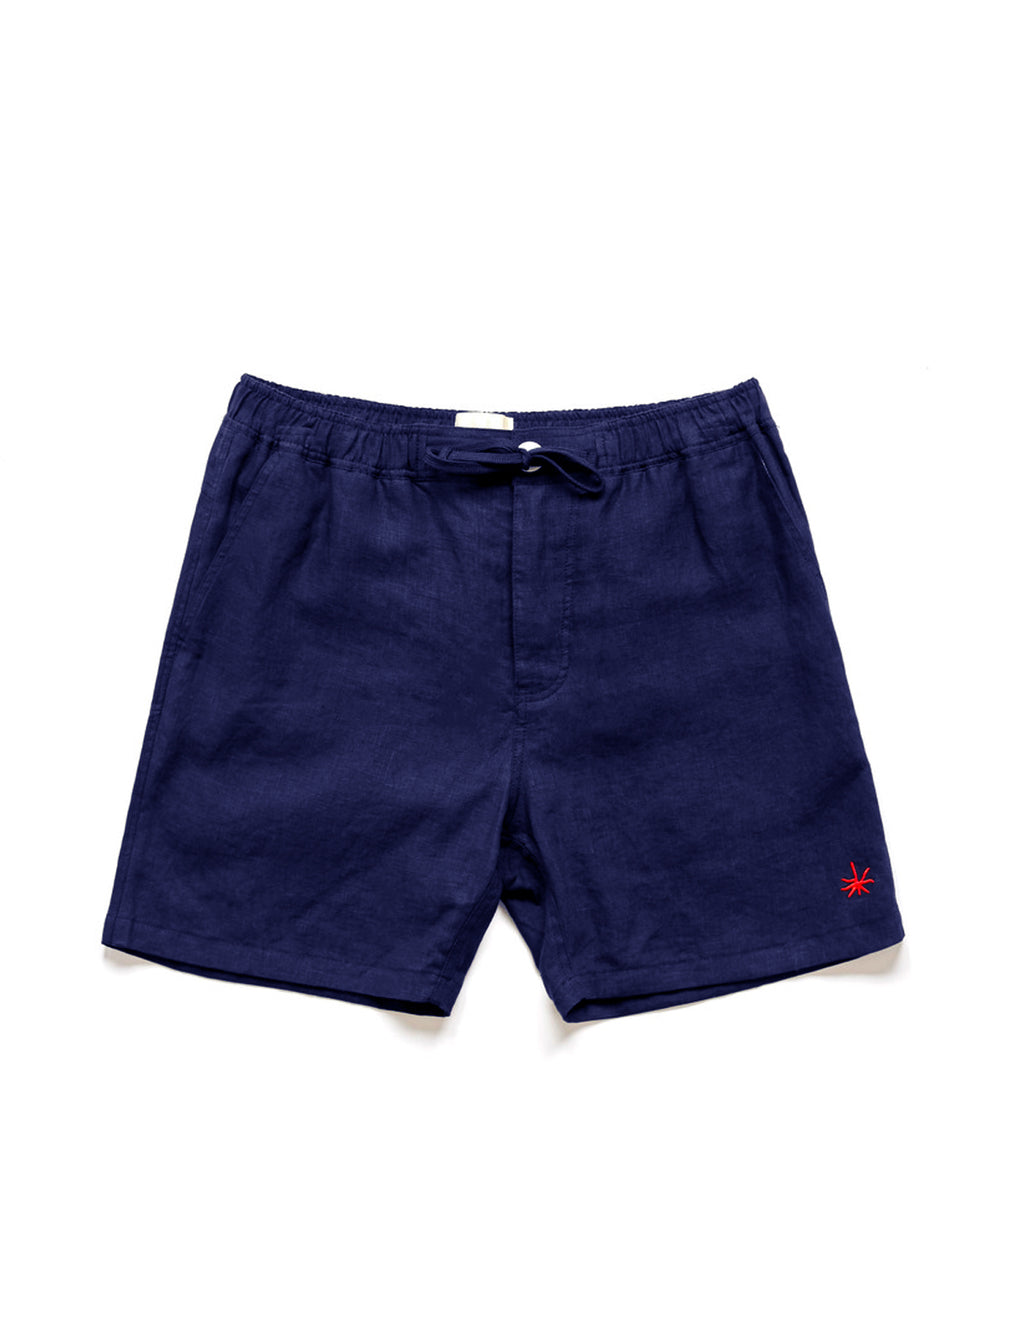 hemp-shorts-navy